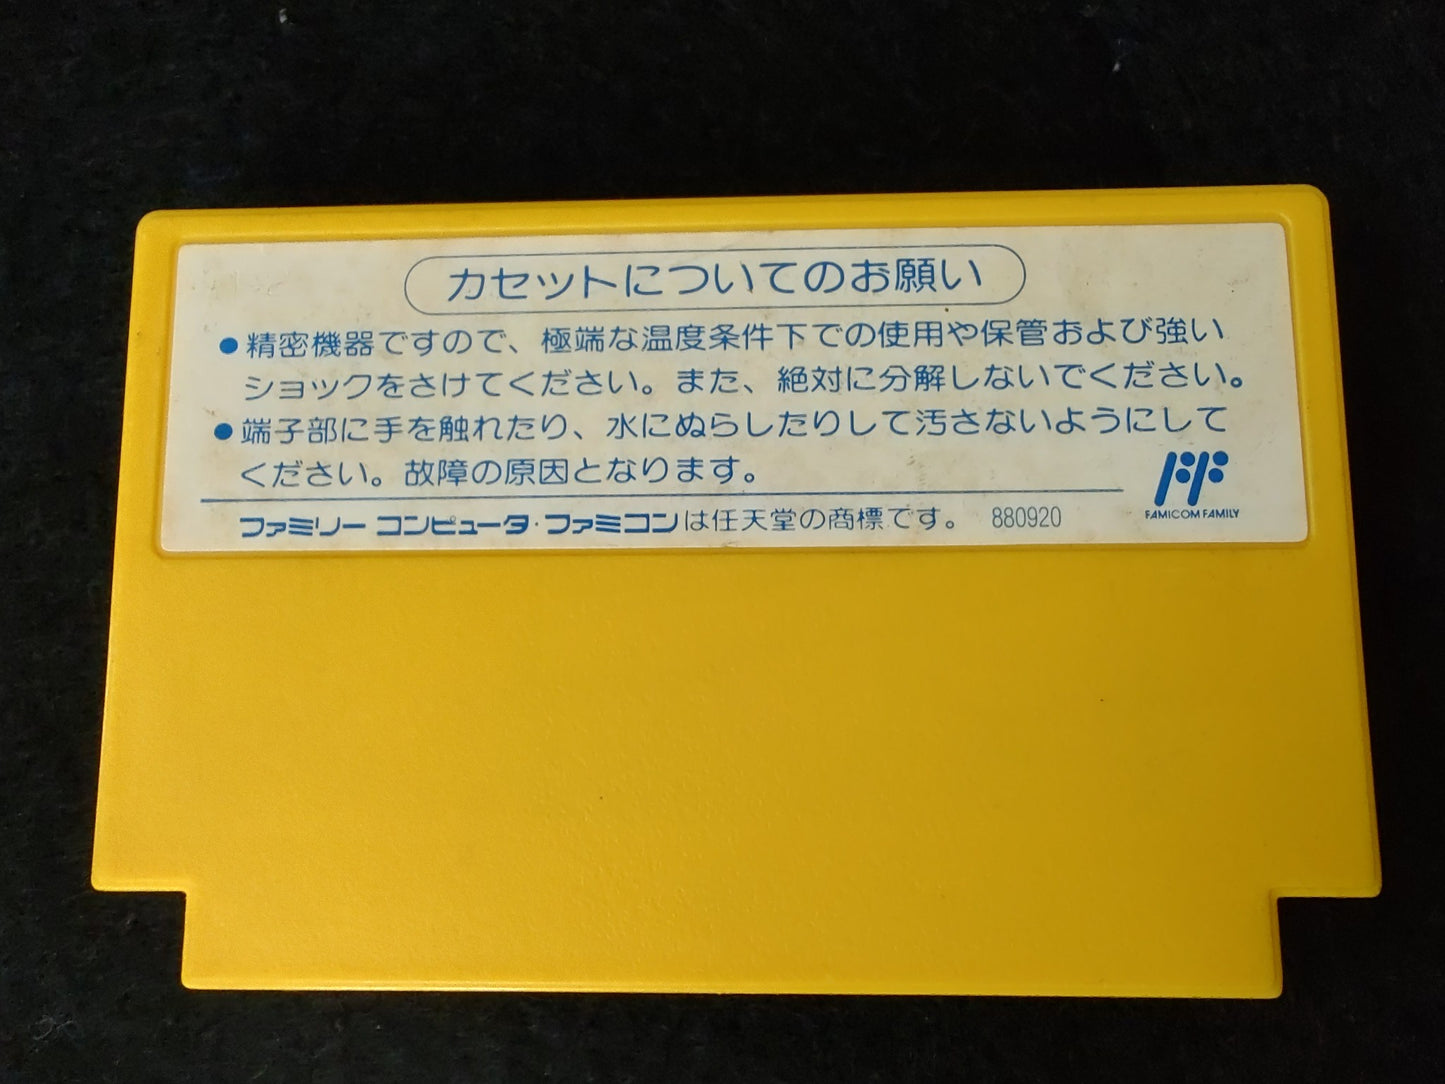 Rockman 6 MEGAMAN Famicom FC NES Cartridge only, working-f1206-